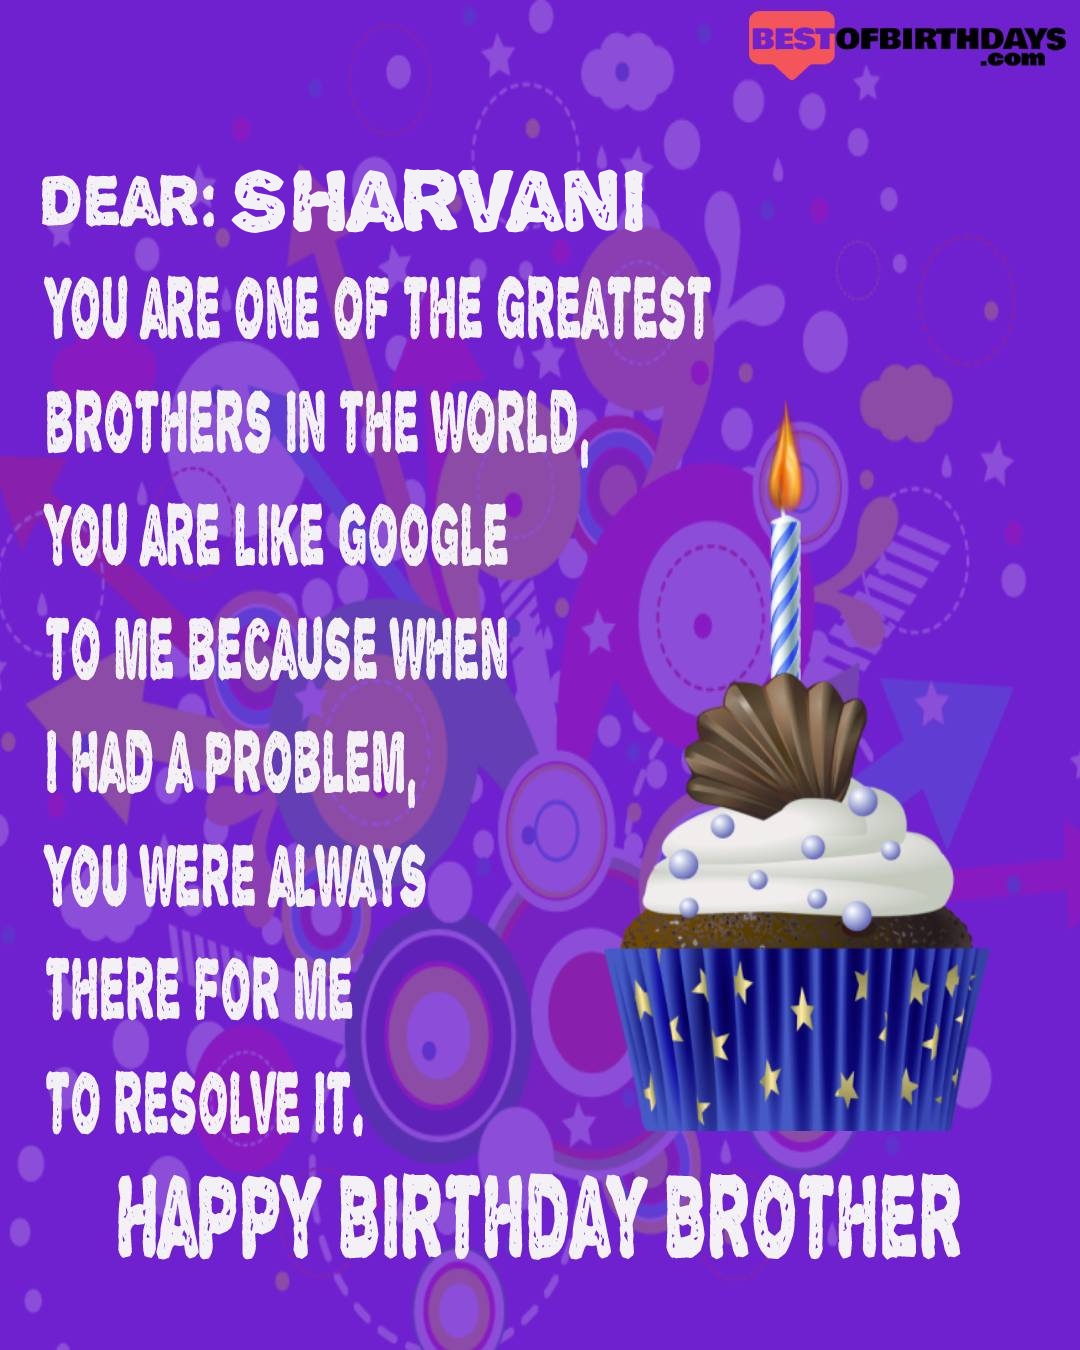 Happy birthday sharvani bhai brother bro